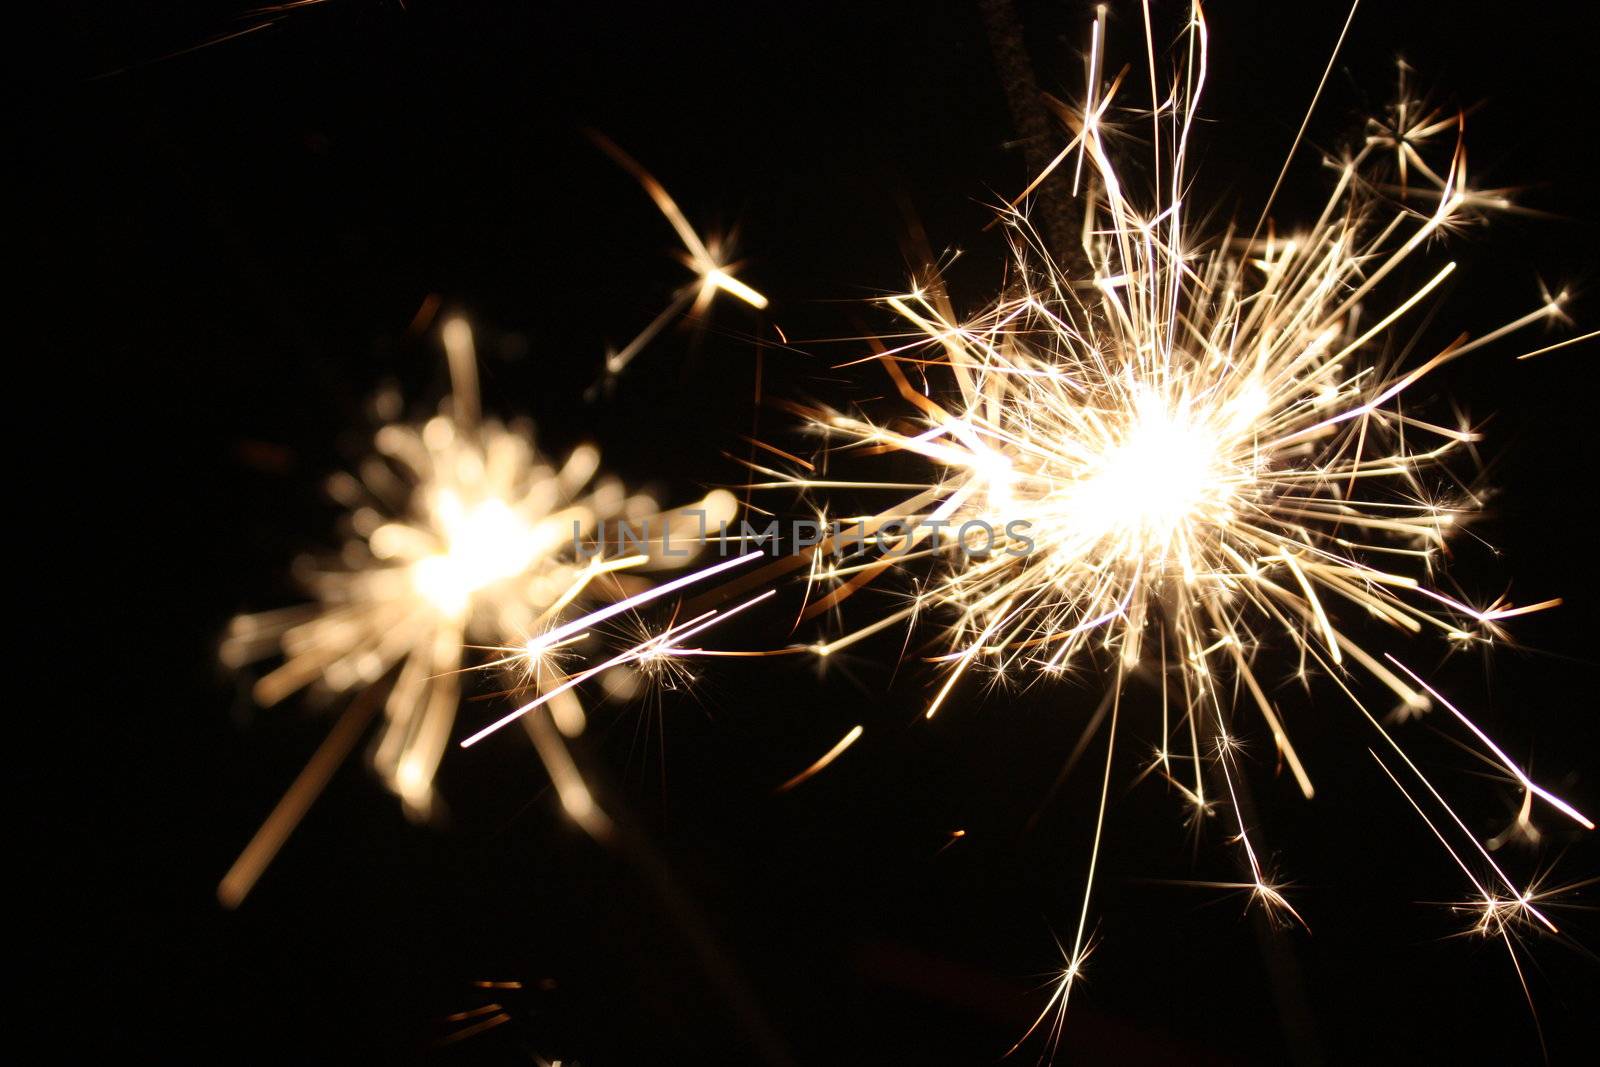 burning sparkler on New Year�s Eve